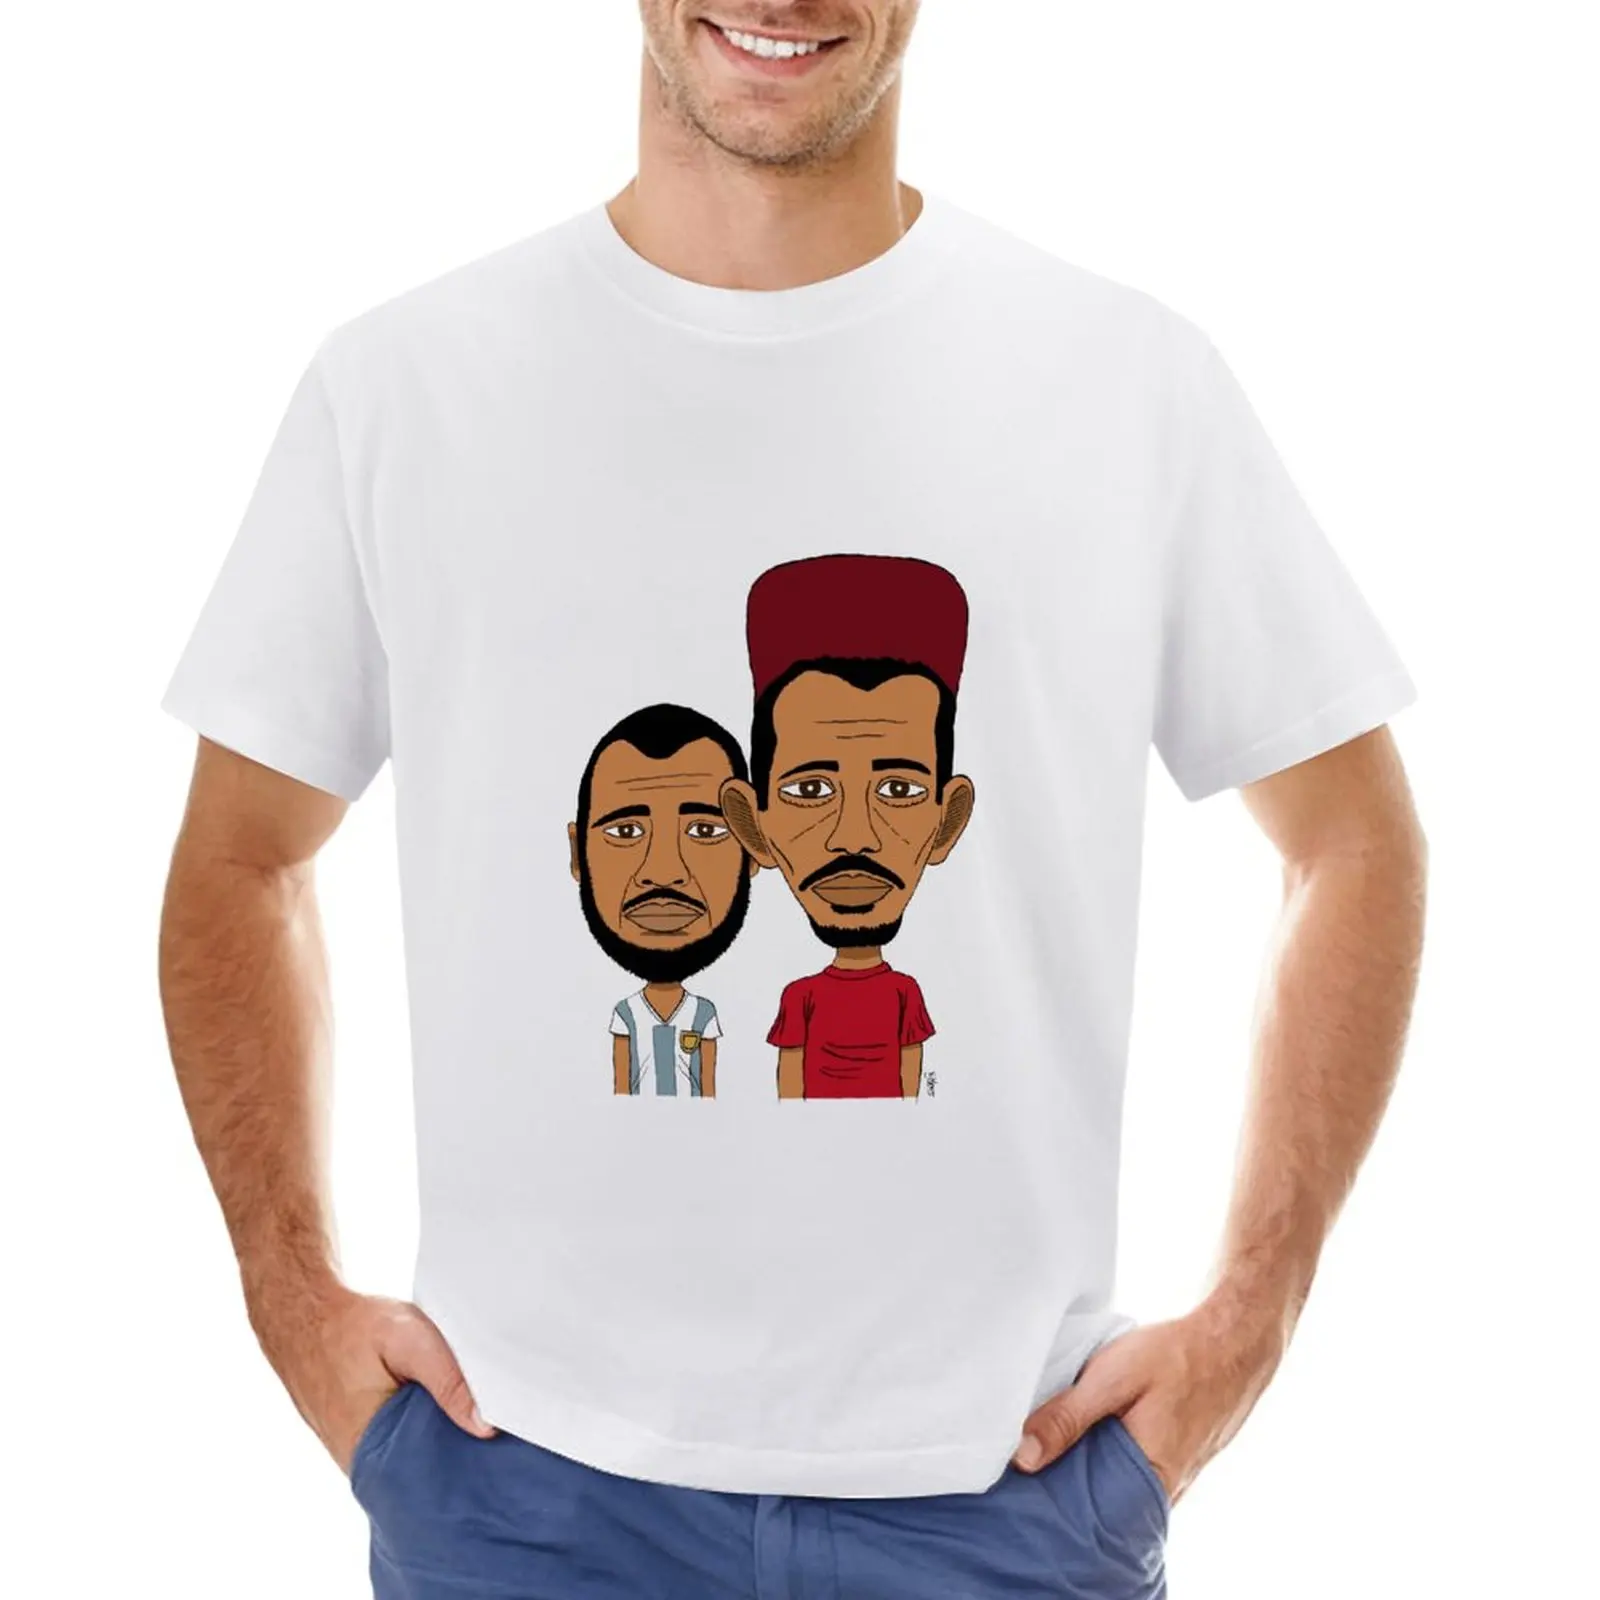 

Bigflo & Oli design. T-Shirt customs design your own customs summer tops t shirts for men